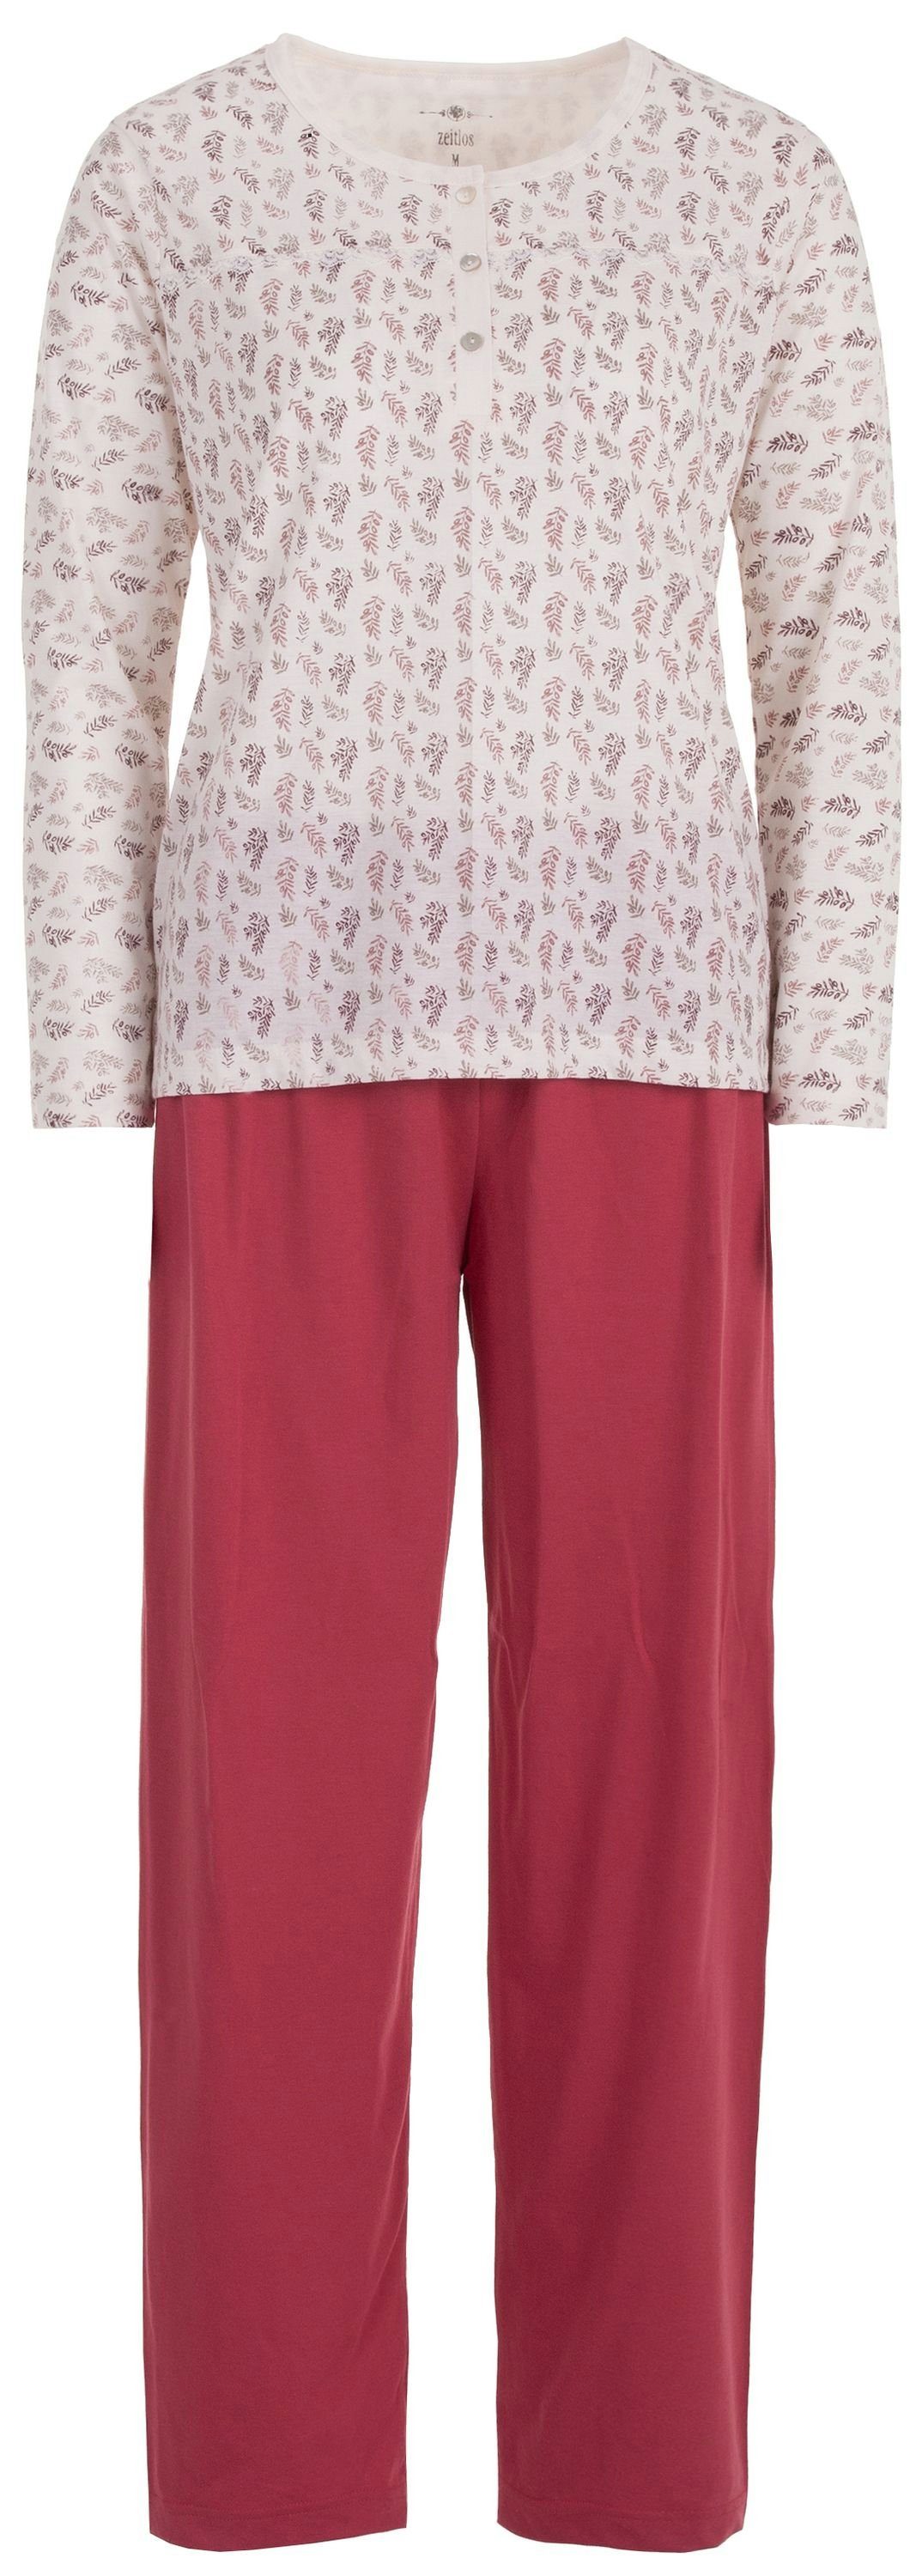 Langarm Set Schlafanzug - Zweige Pyjama zeitlos altrosa